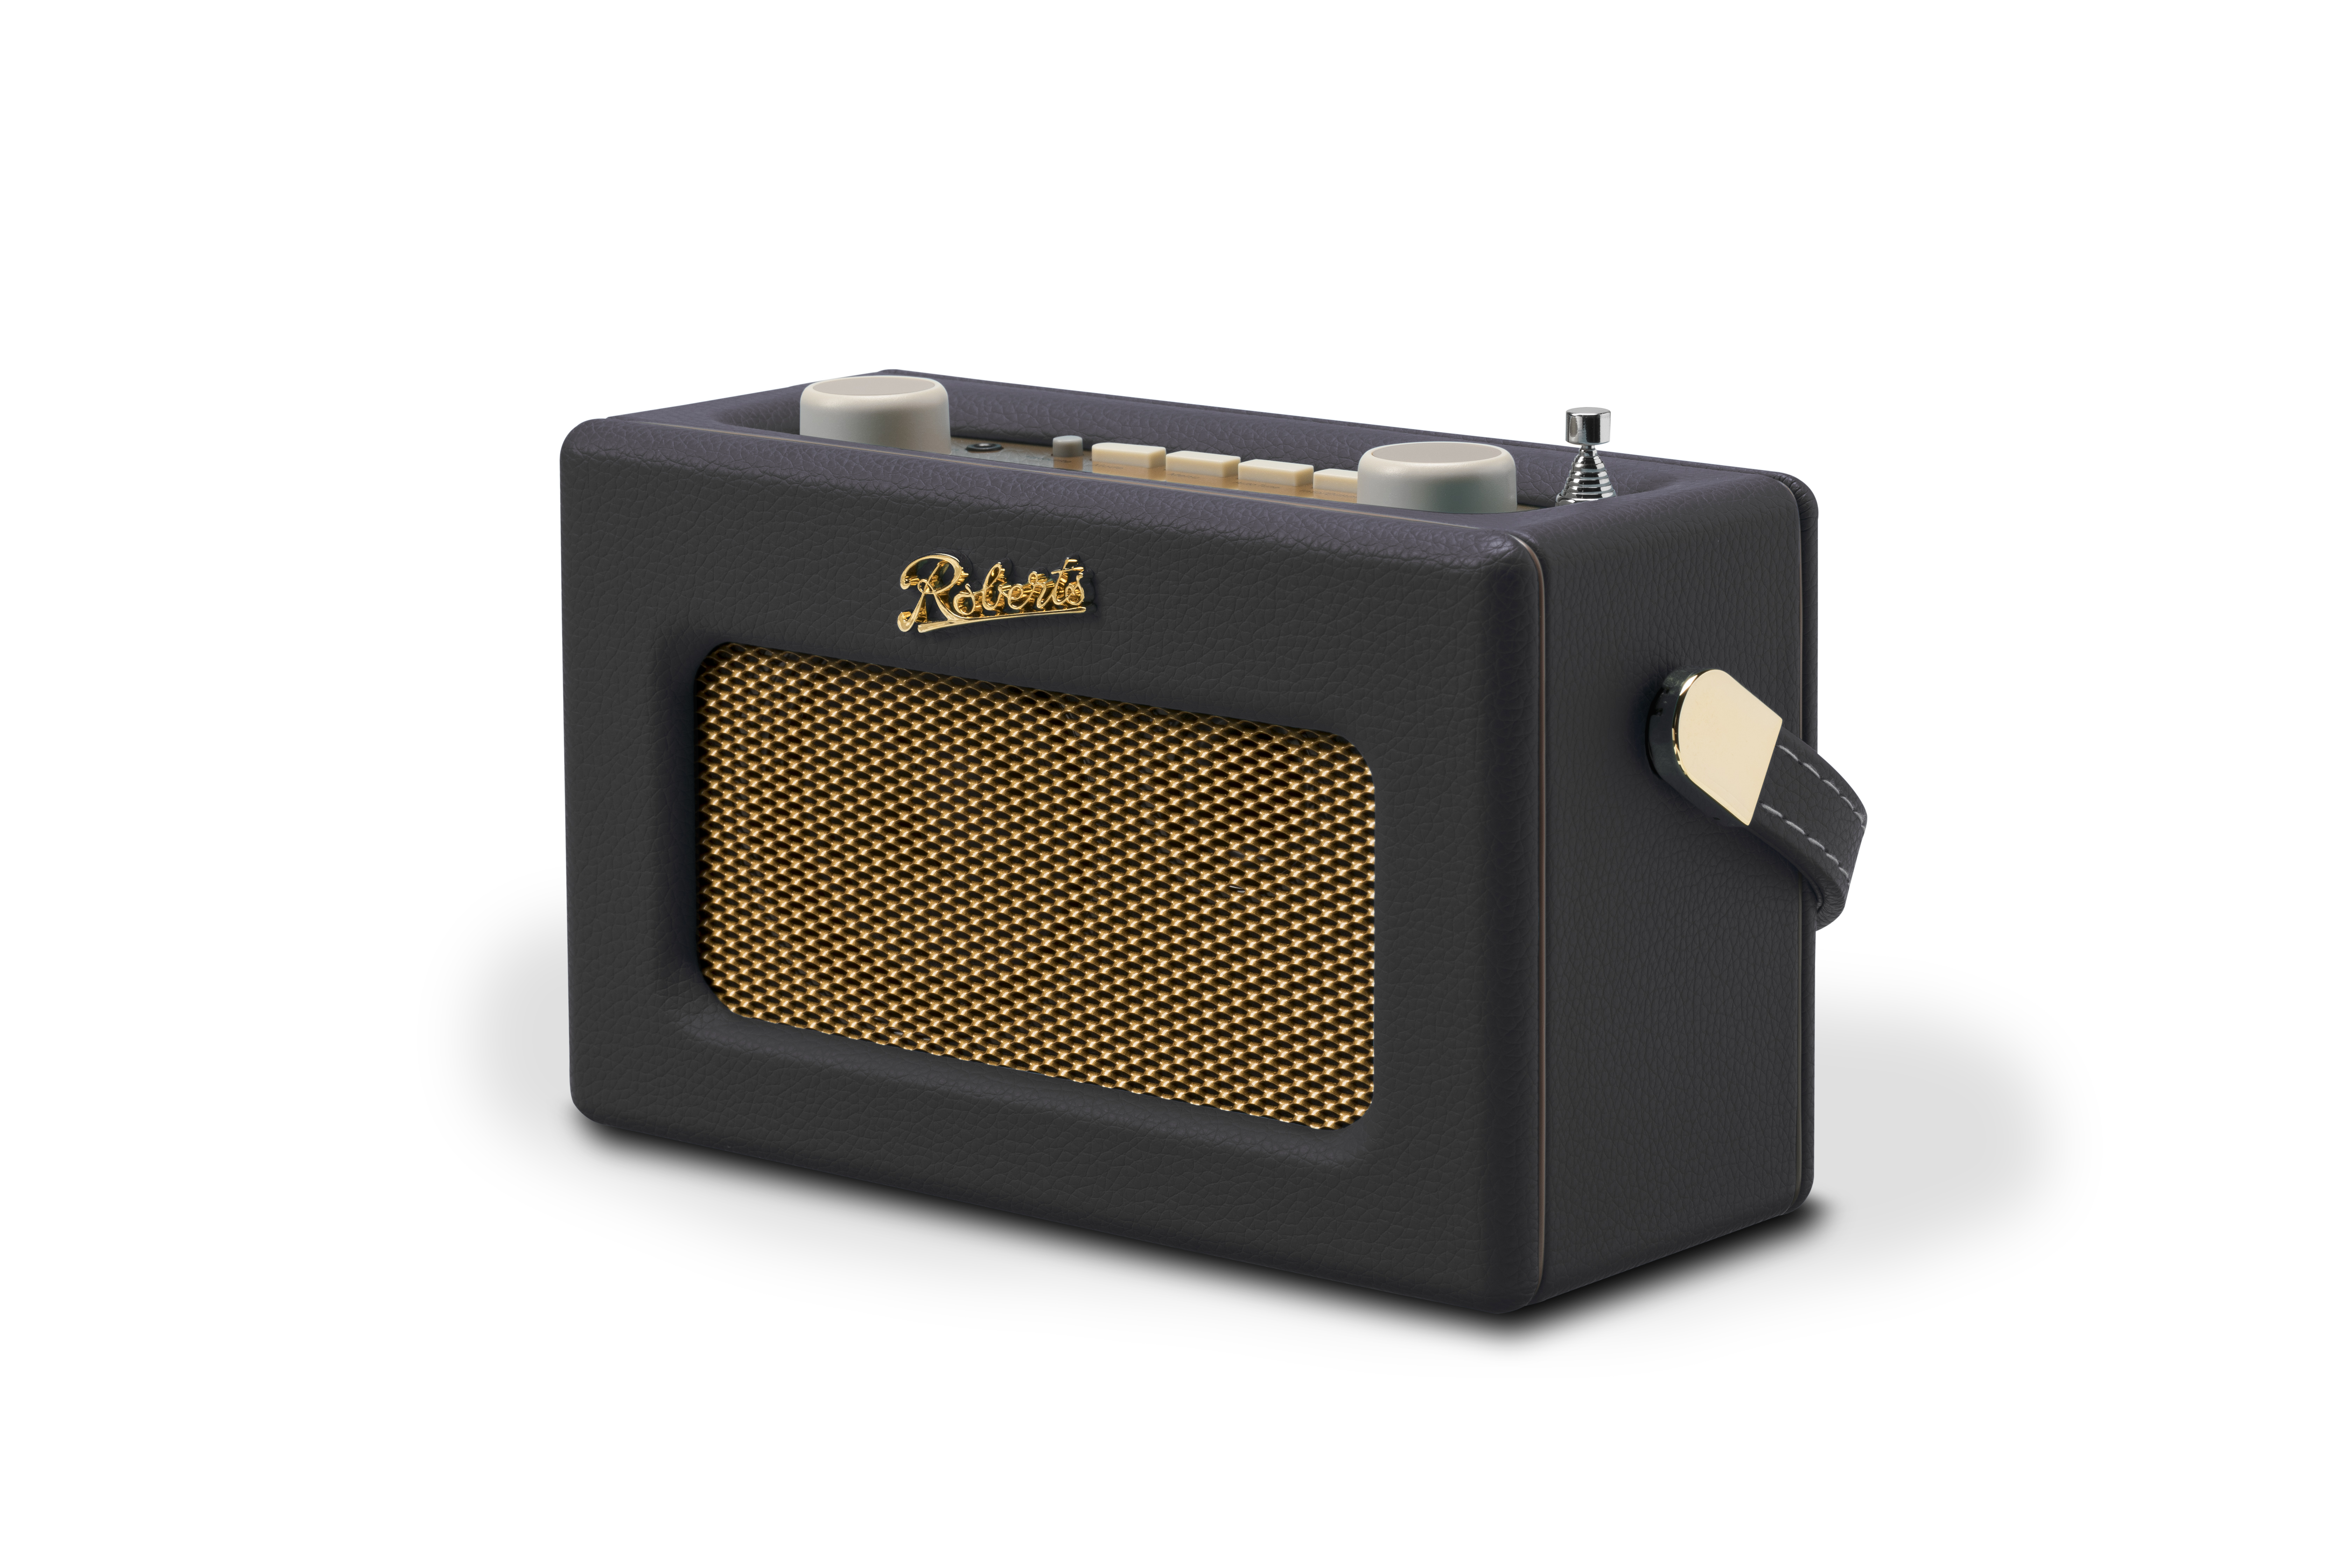 ROBERTS RADIO Revival | mit Uno BT Radio DAB+/FM Digitalradio, | Schwarz black DAB+, tragbares Bluetooth